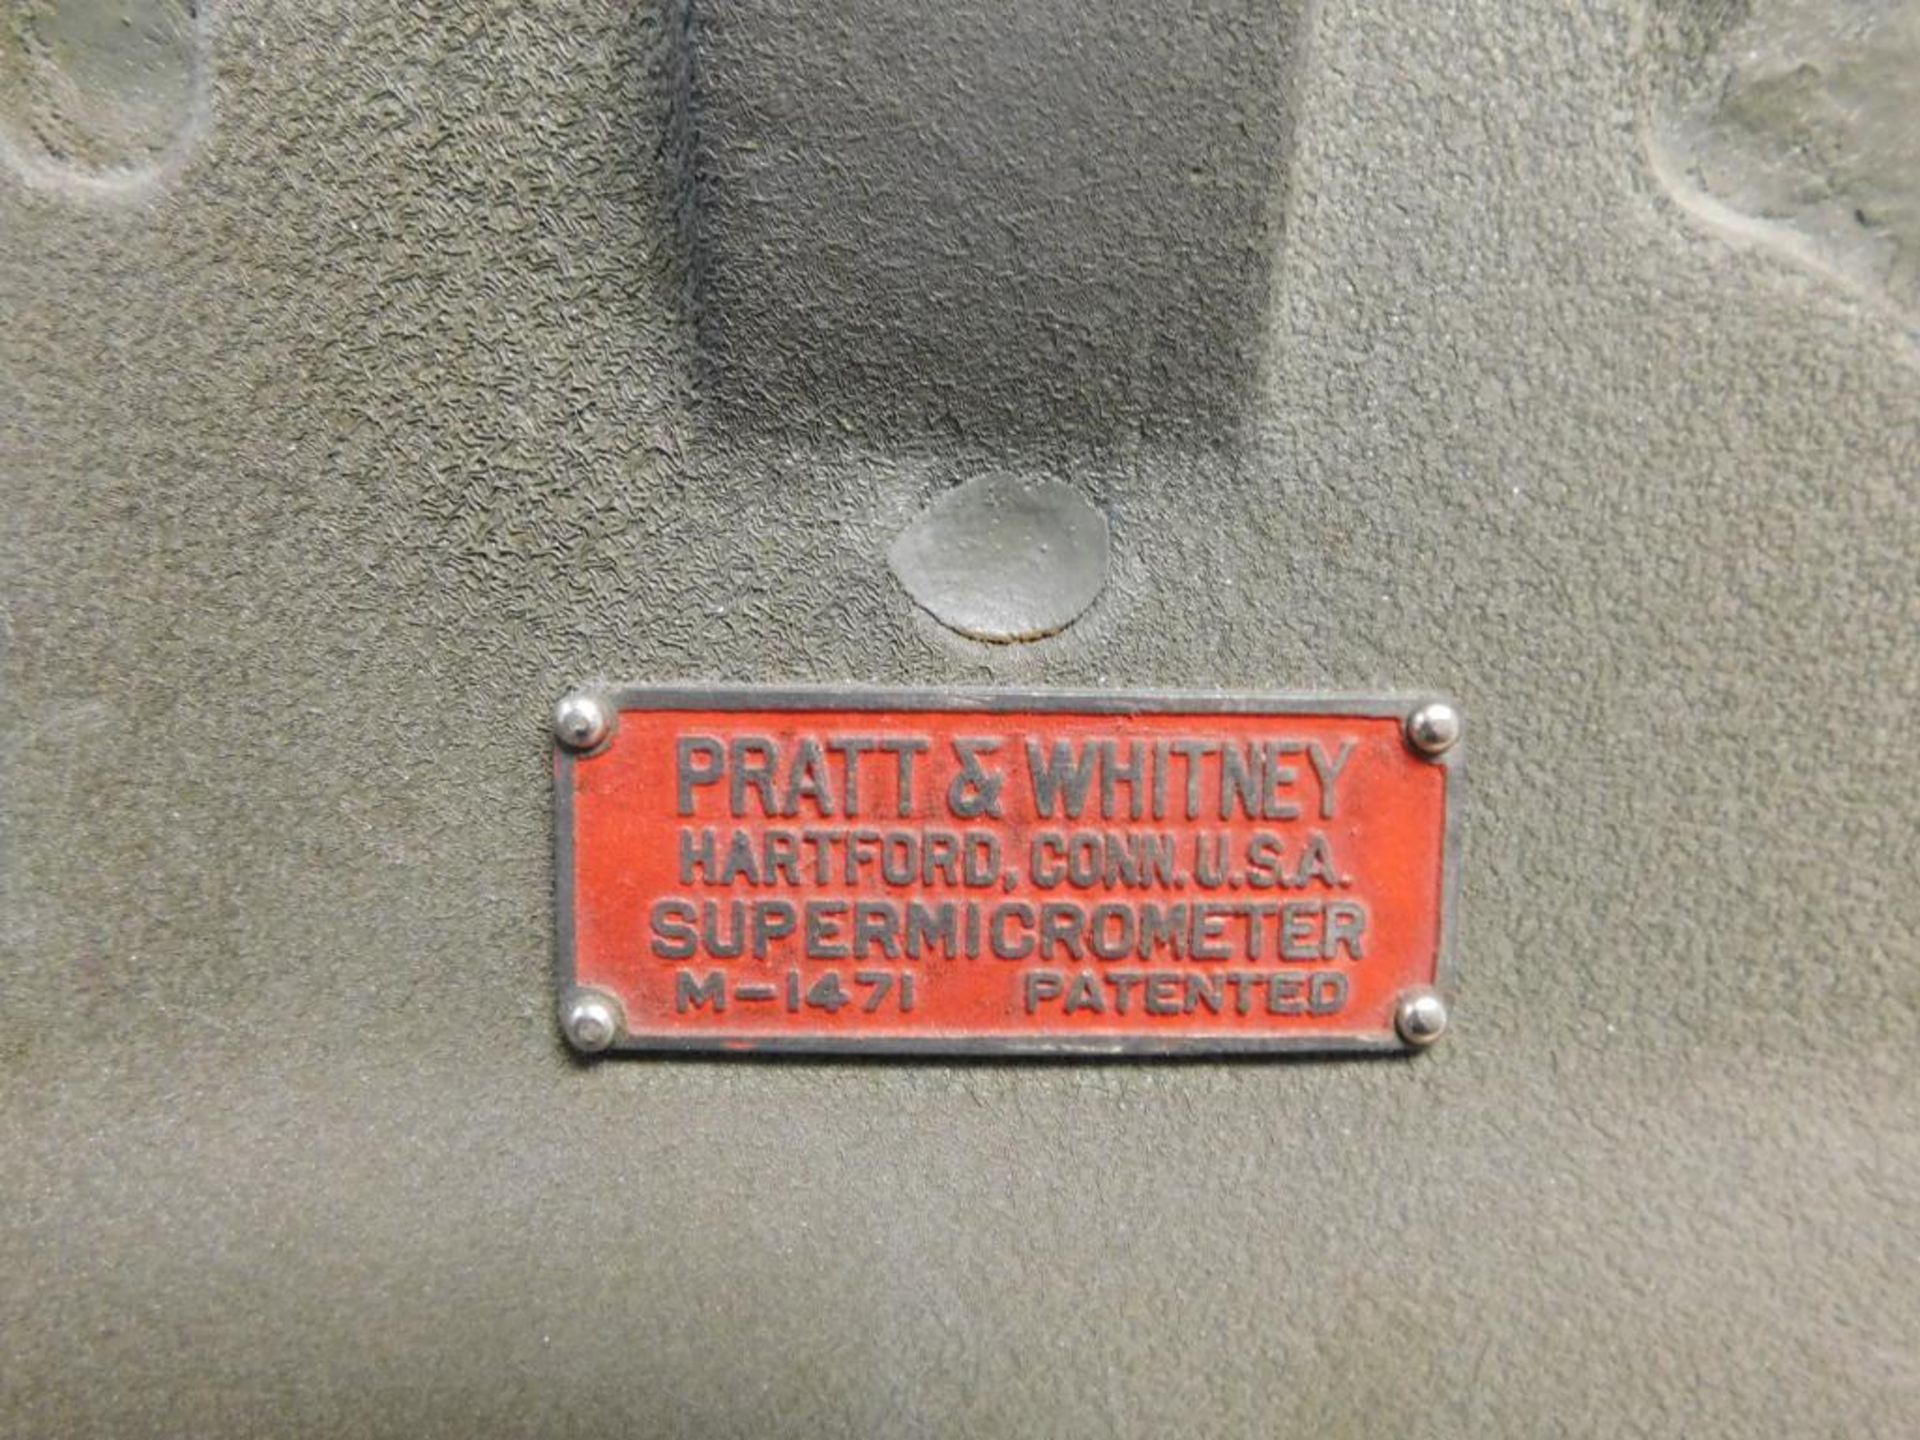 Pratt & Whitney M-1471 Supermicrometer (in calibration) - Image 4 of 4